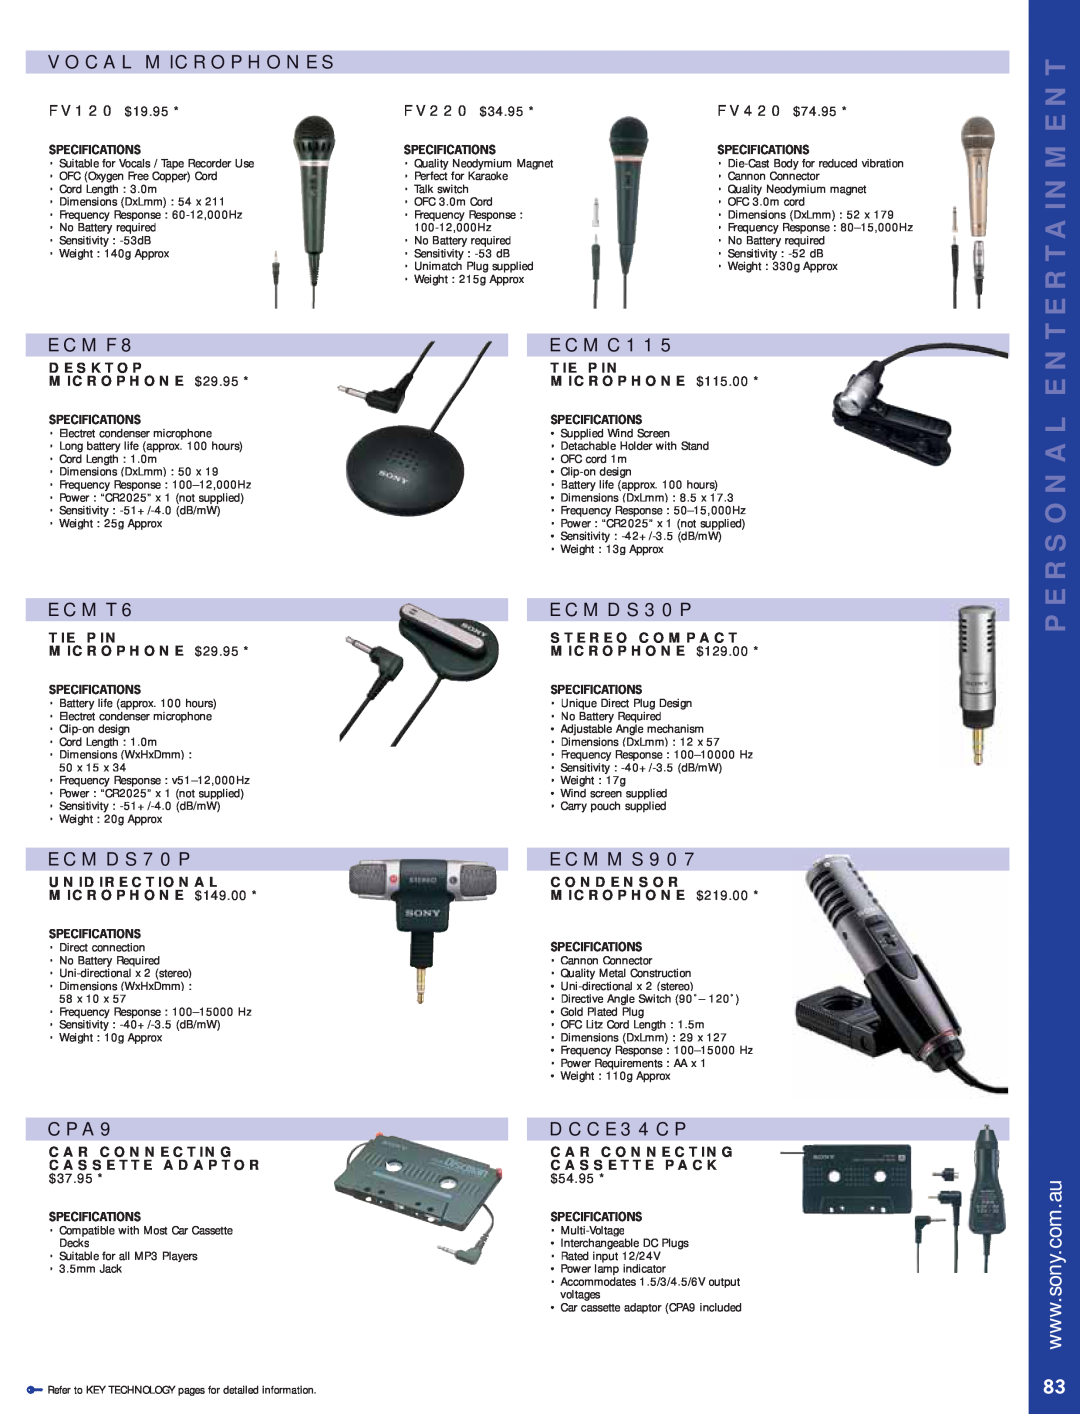 Sony Bravia LCD TV Vocal Microphones, ECMF8, ECMT6, ECMDS70P, CPA9, ECMC115, ECMDS30P, ECMMS907, DCCE34CP, Entertainment 